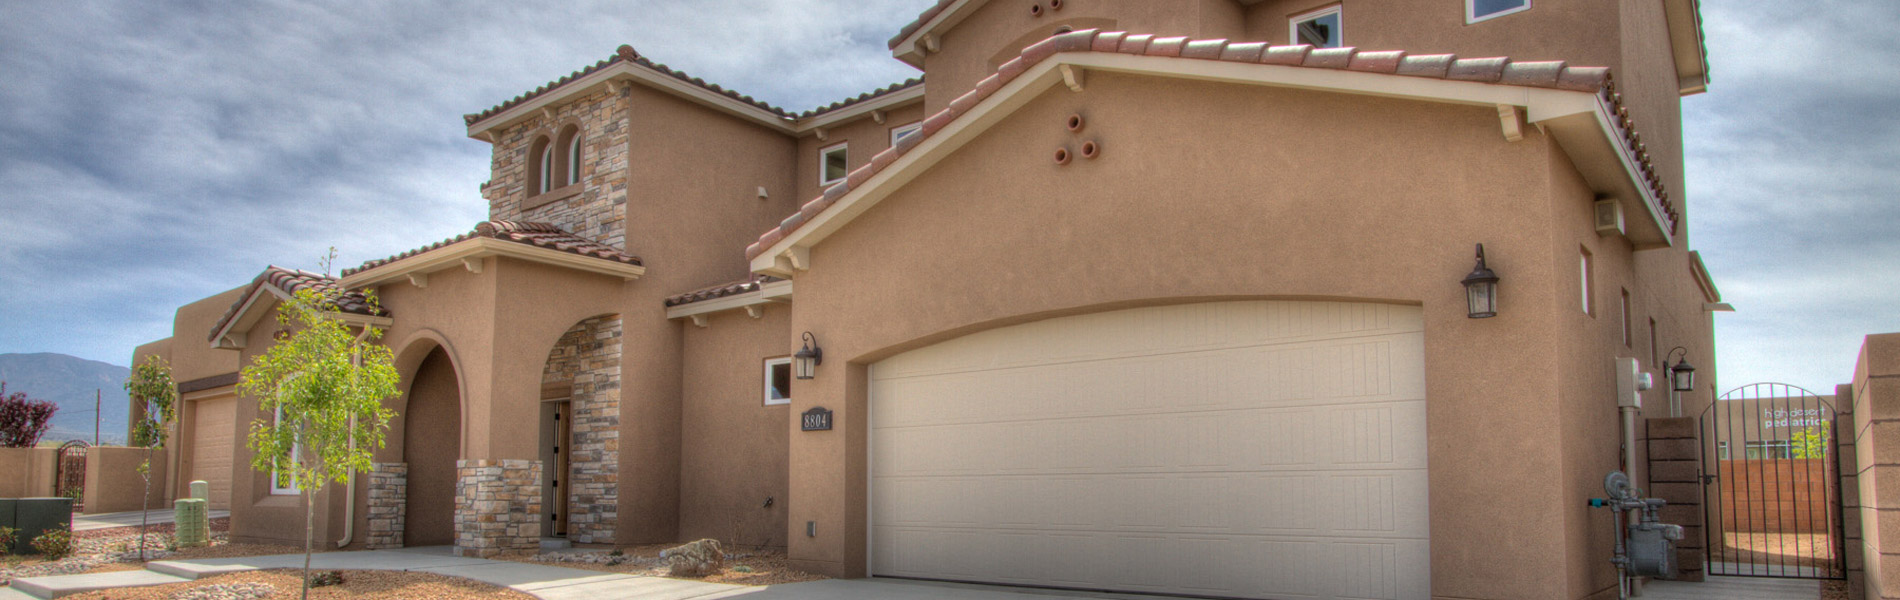 Albuquerque & Santa Fe Custom Home Builder Project Image